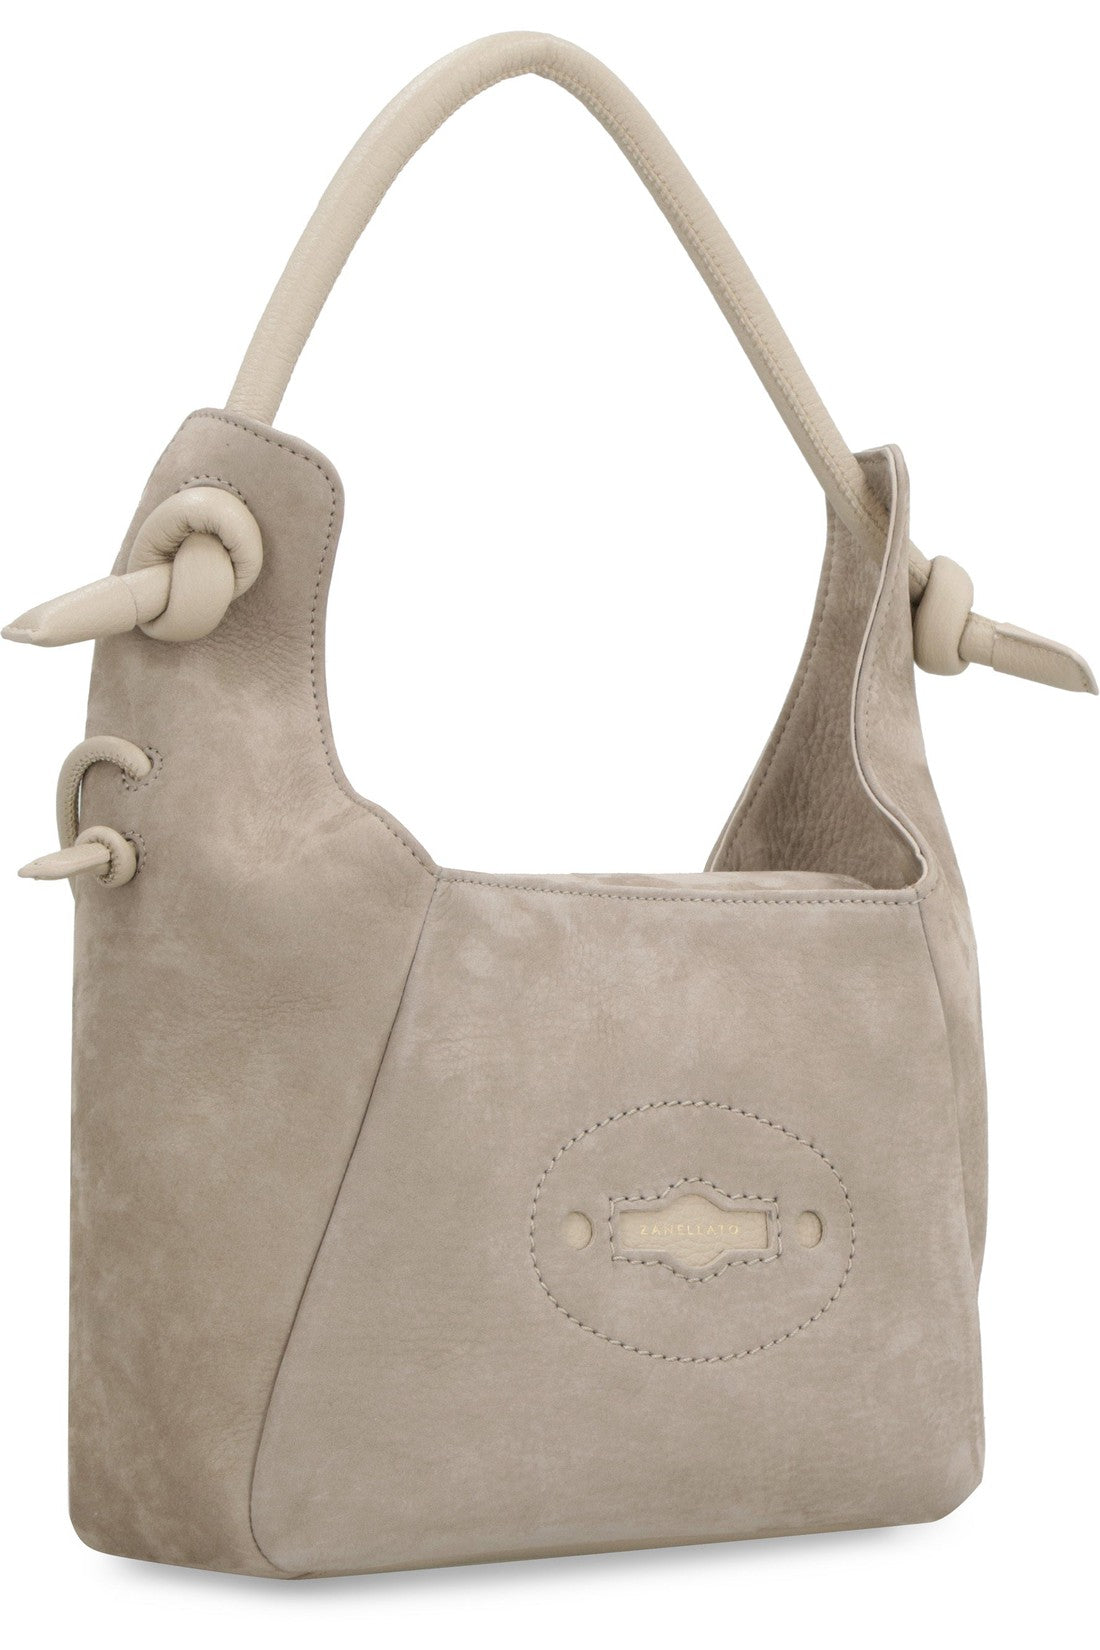 Zanellato-OUTLET-SALE-Mina leather handbag-ARCHIVIST